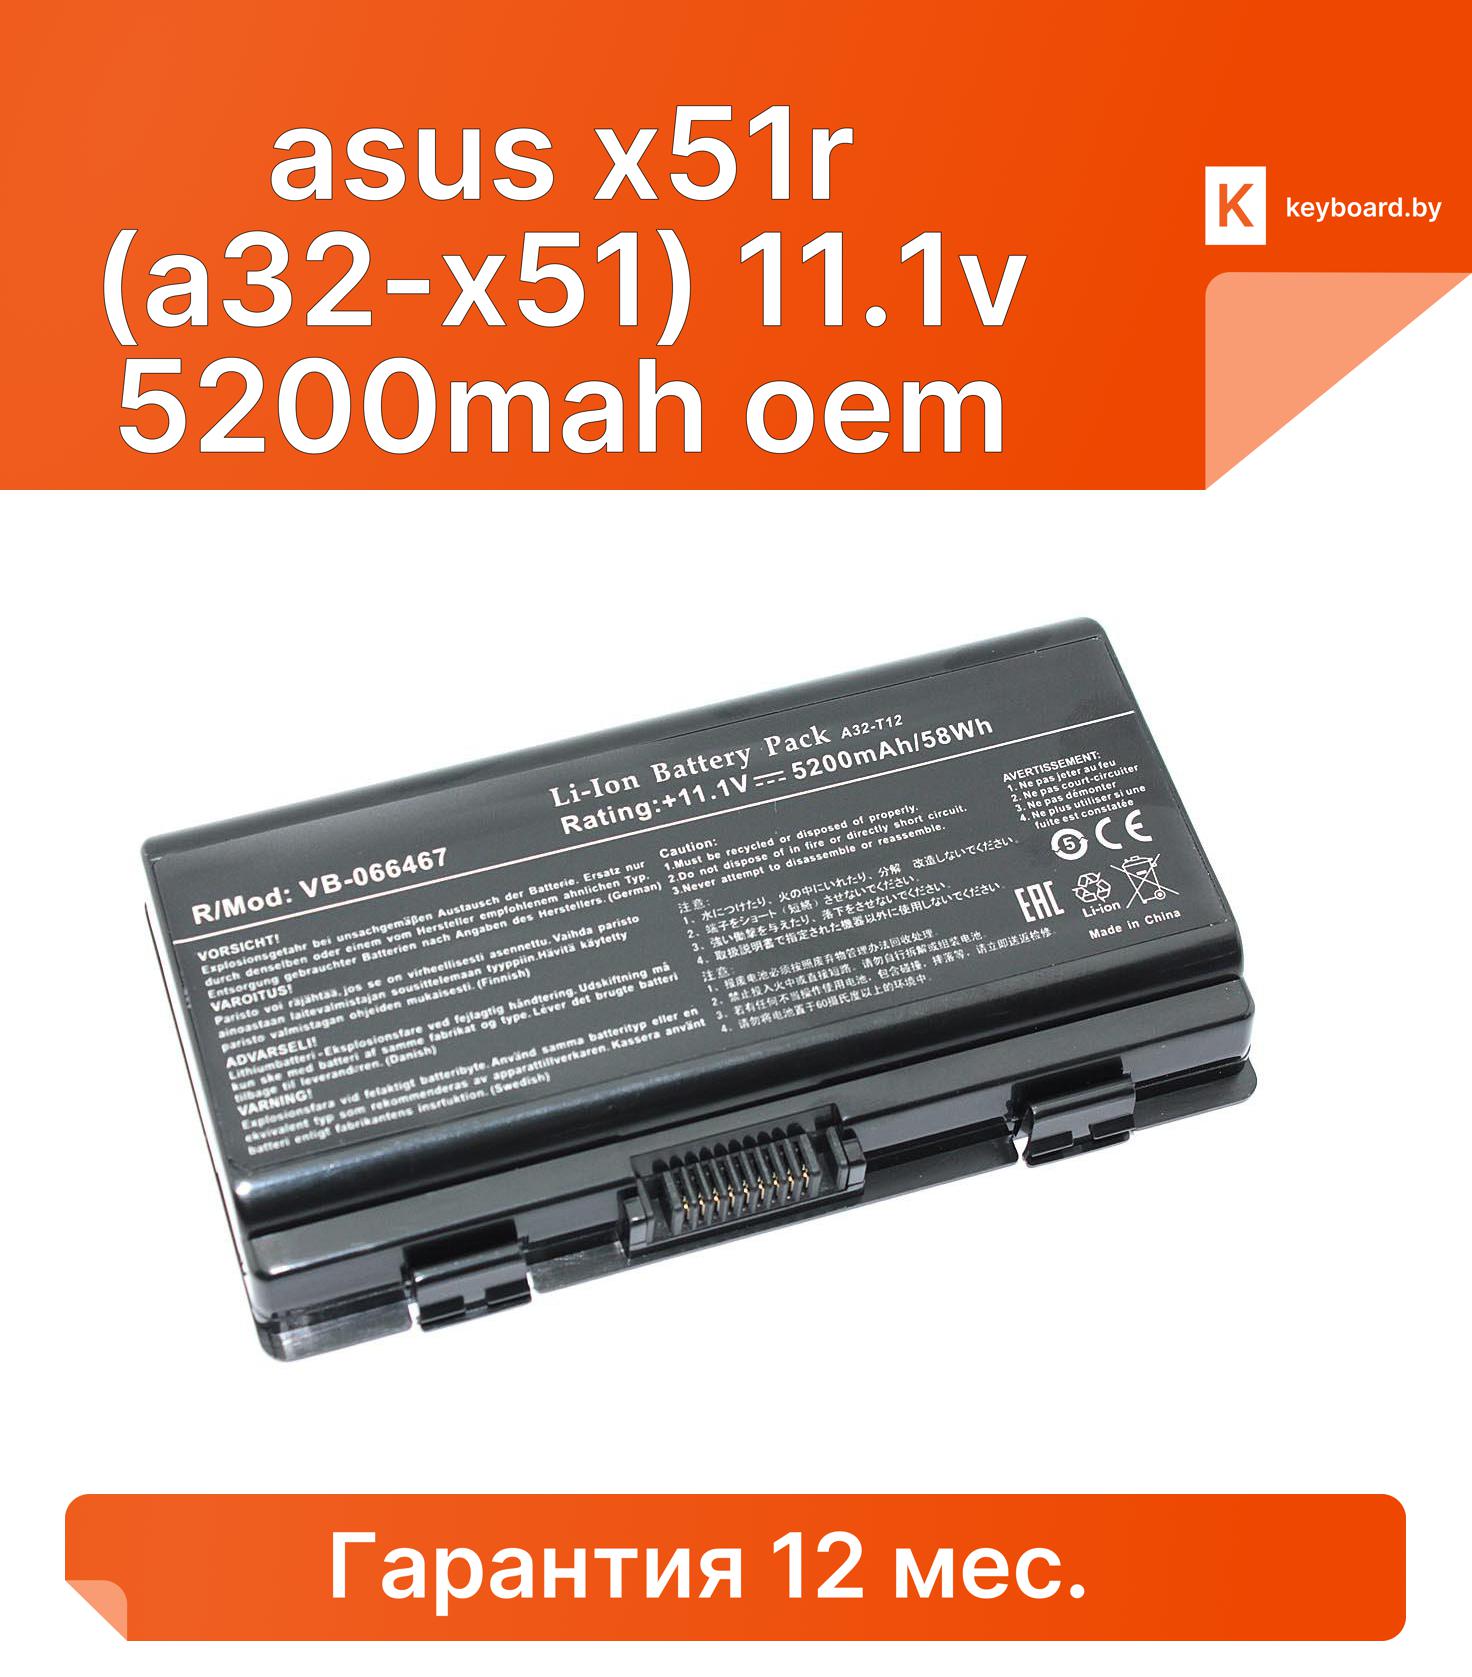 Аккумуляторная батарея для ноутбука asus x51r (a32-x51) 11.1v 5200mah oem